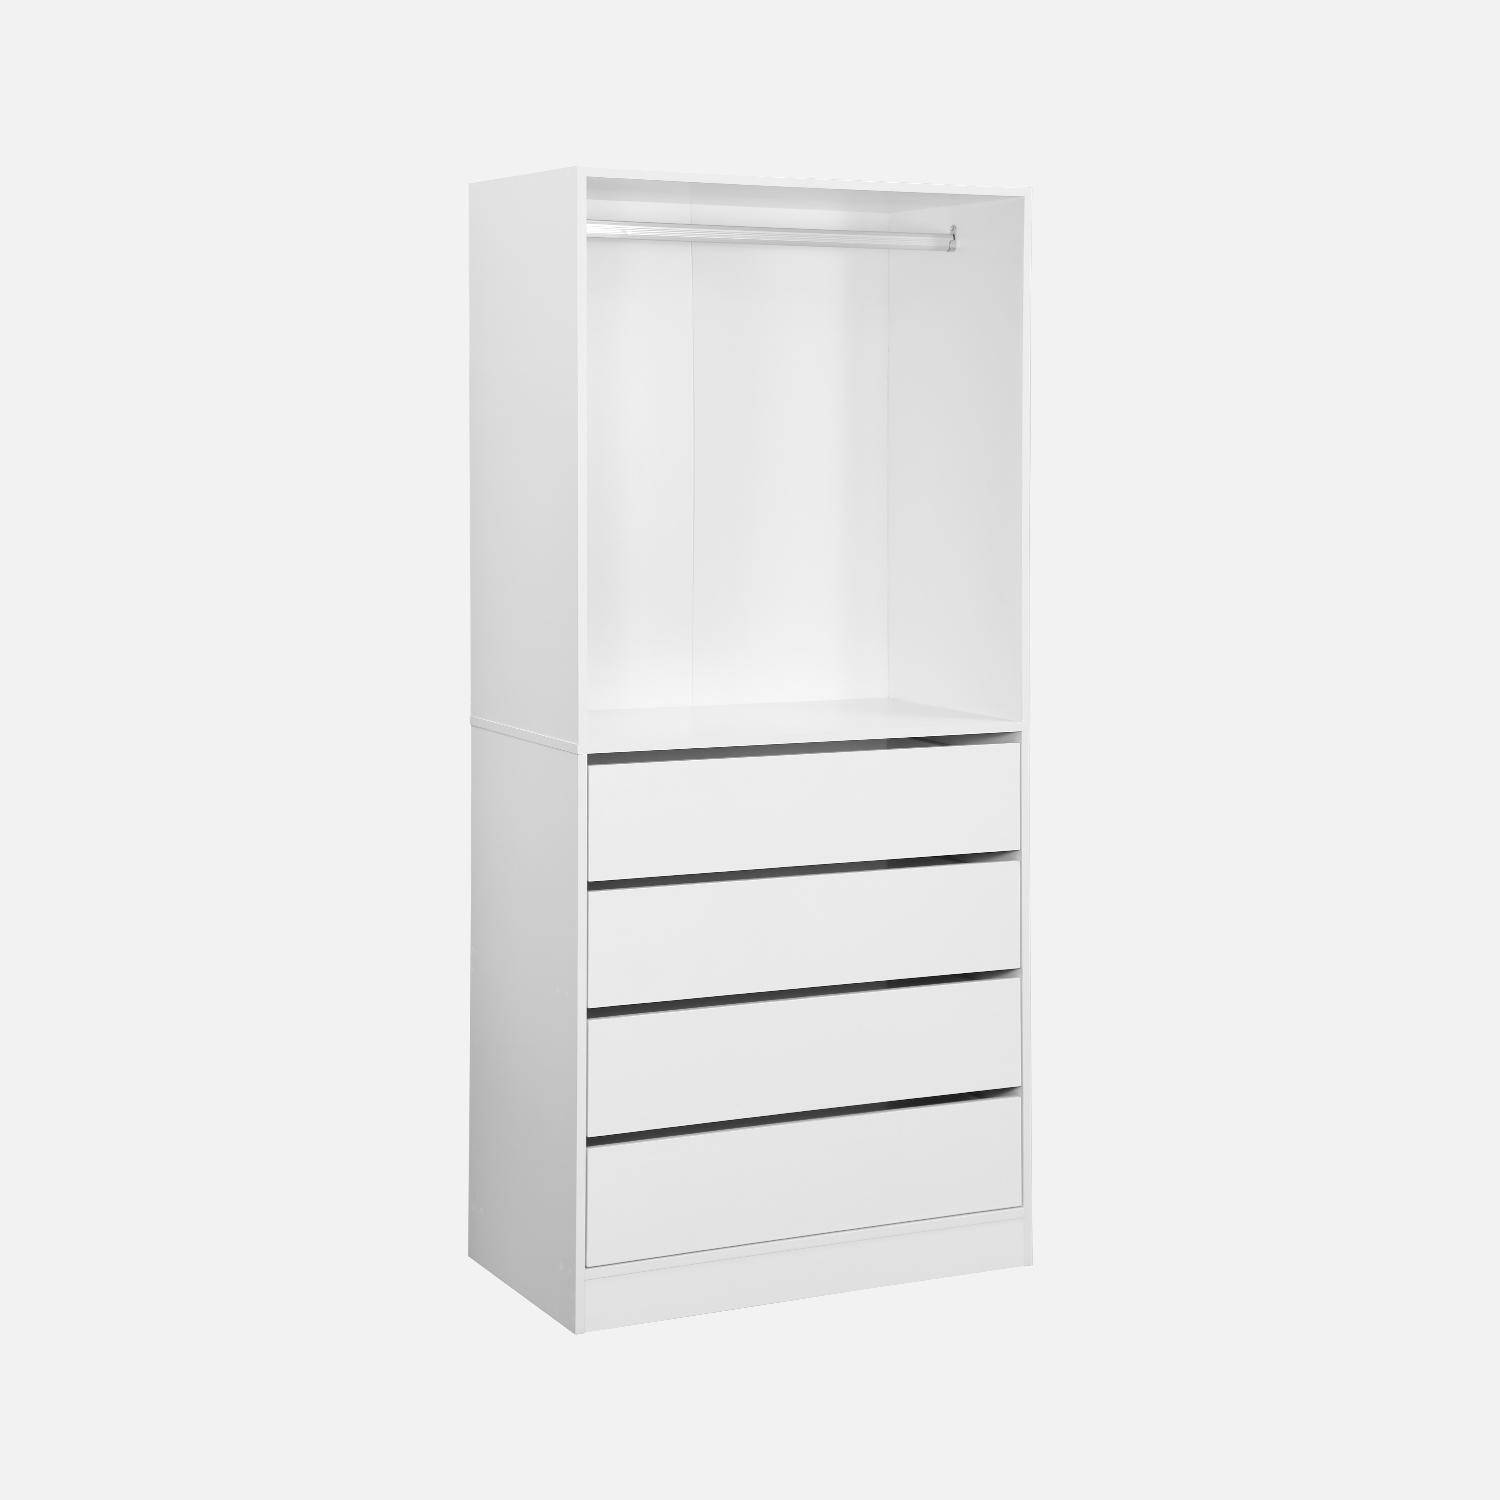 Modular open wardrobe drawer and rail unit, 80x45x180cm, Modulo, 4 drawers, 1 clothes rail, White,sweeek,Photo4